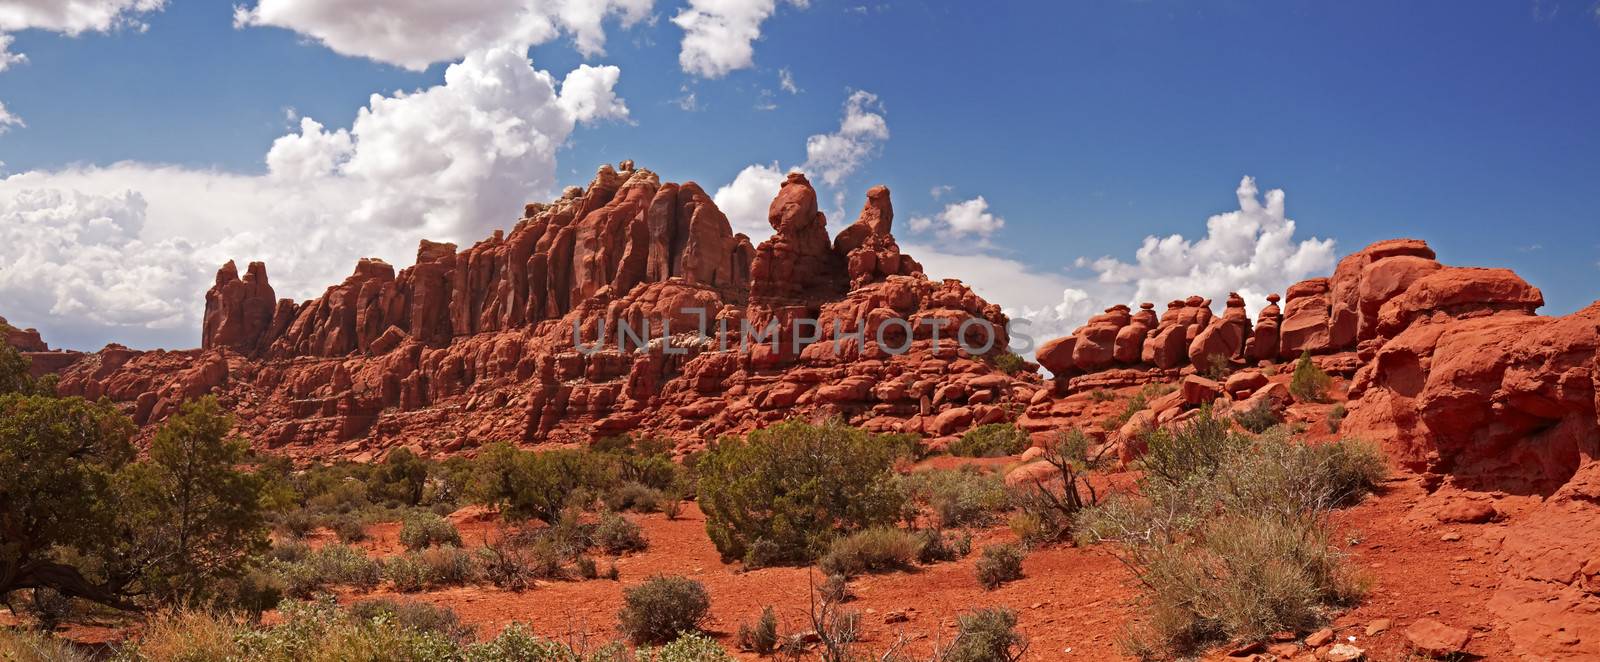 Desert panorama by LoonChild